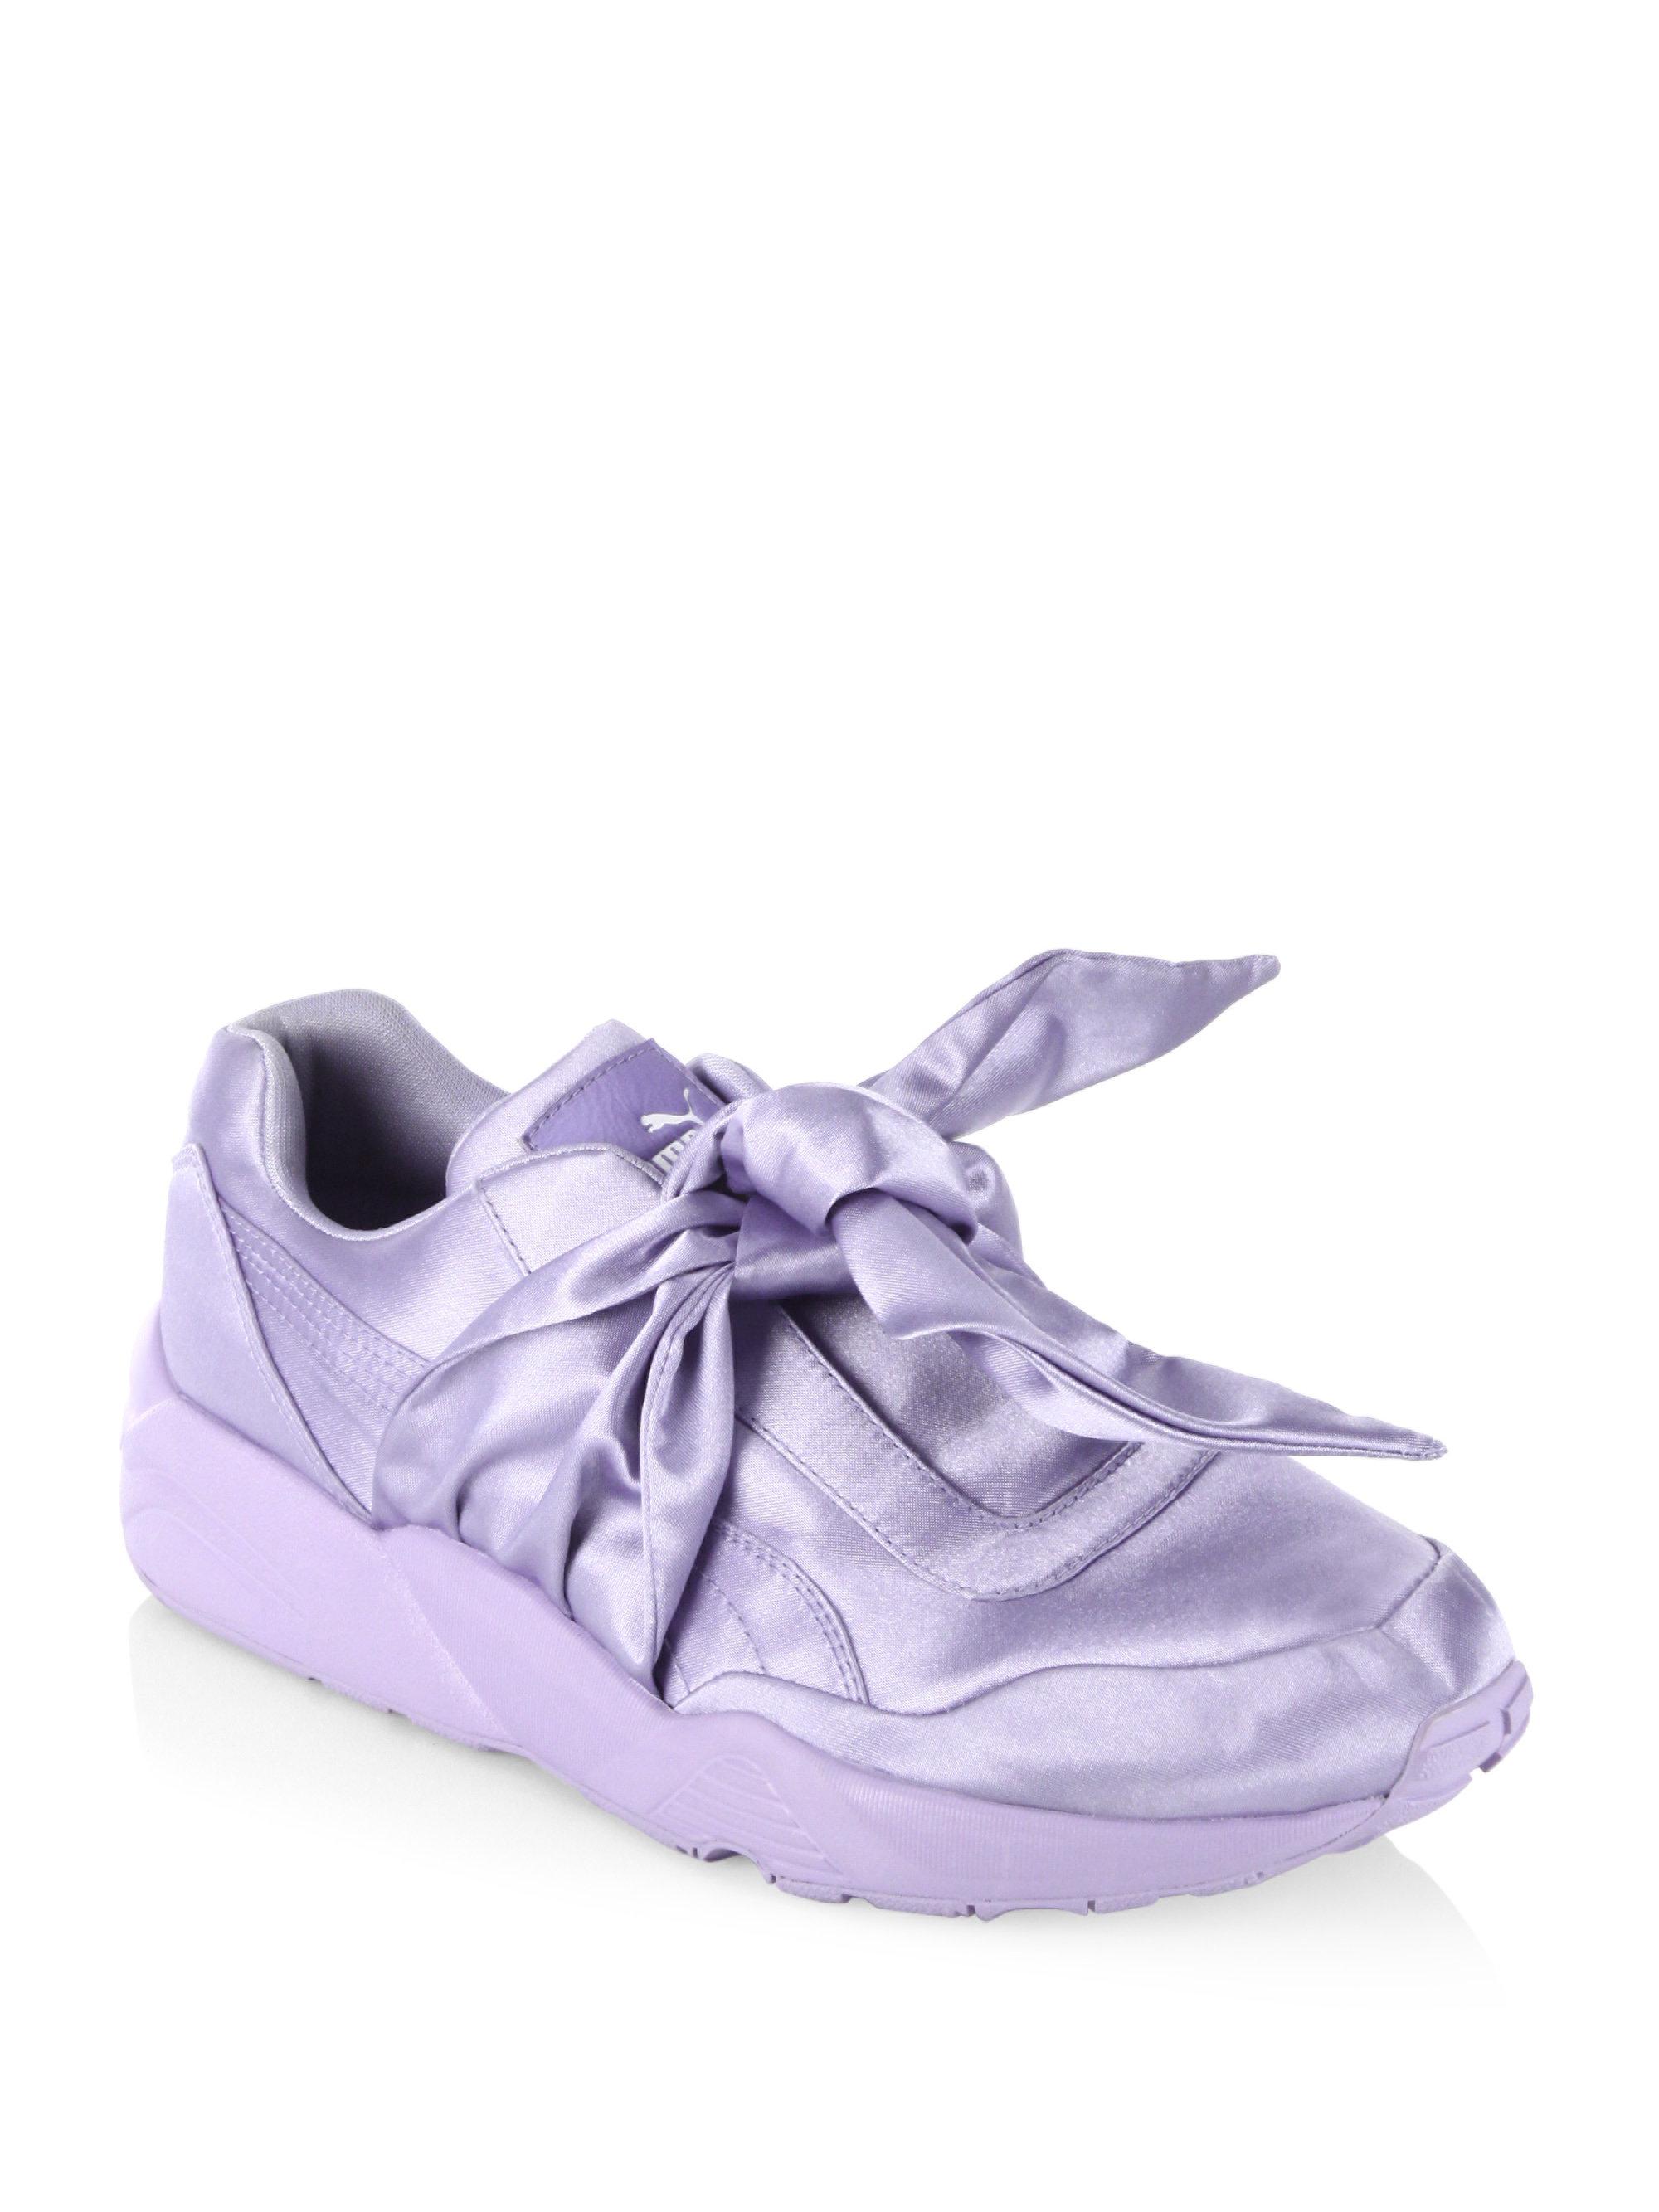 PUMA Satin Fenty By Rihanna Bow Sneaker in Lavender (Blue) | Lyst